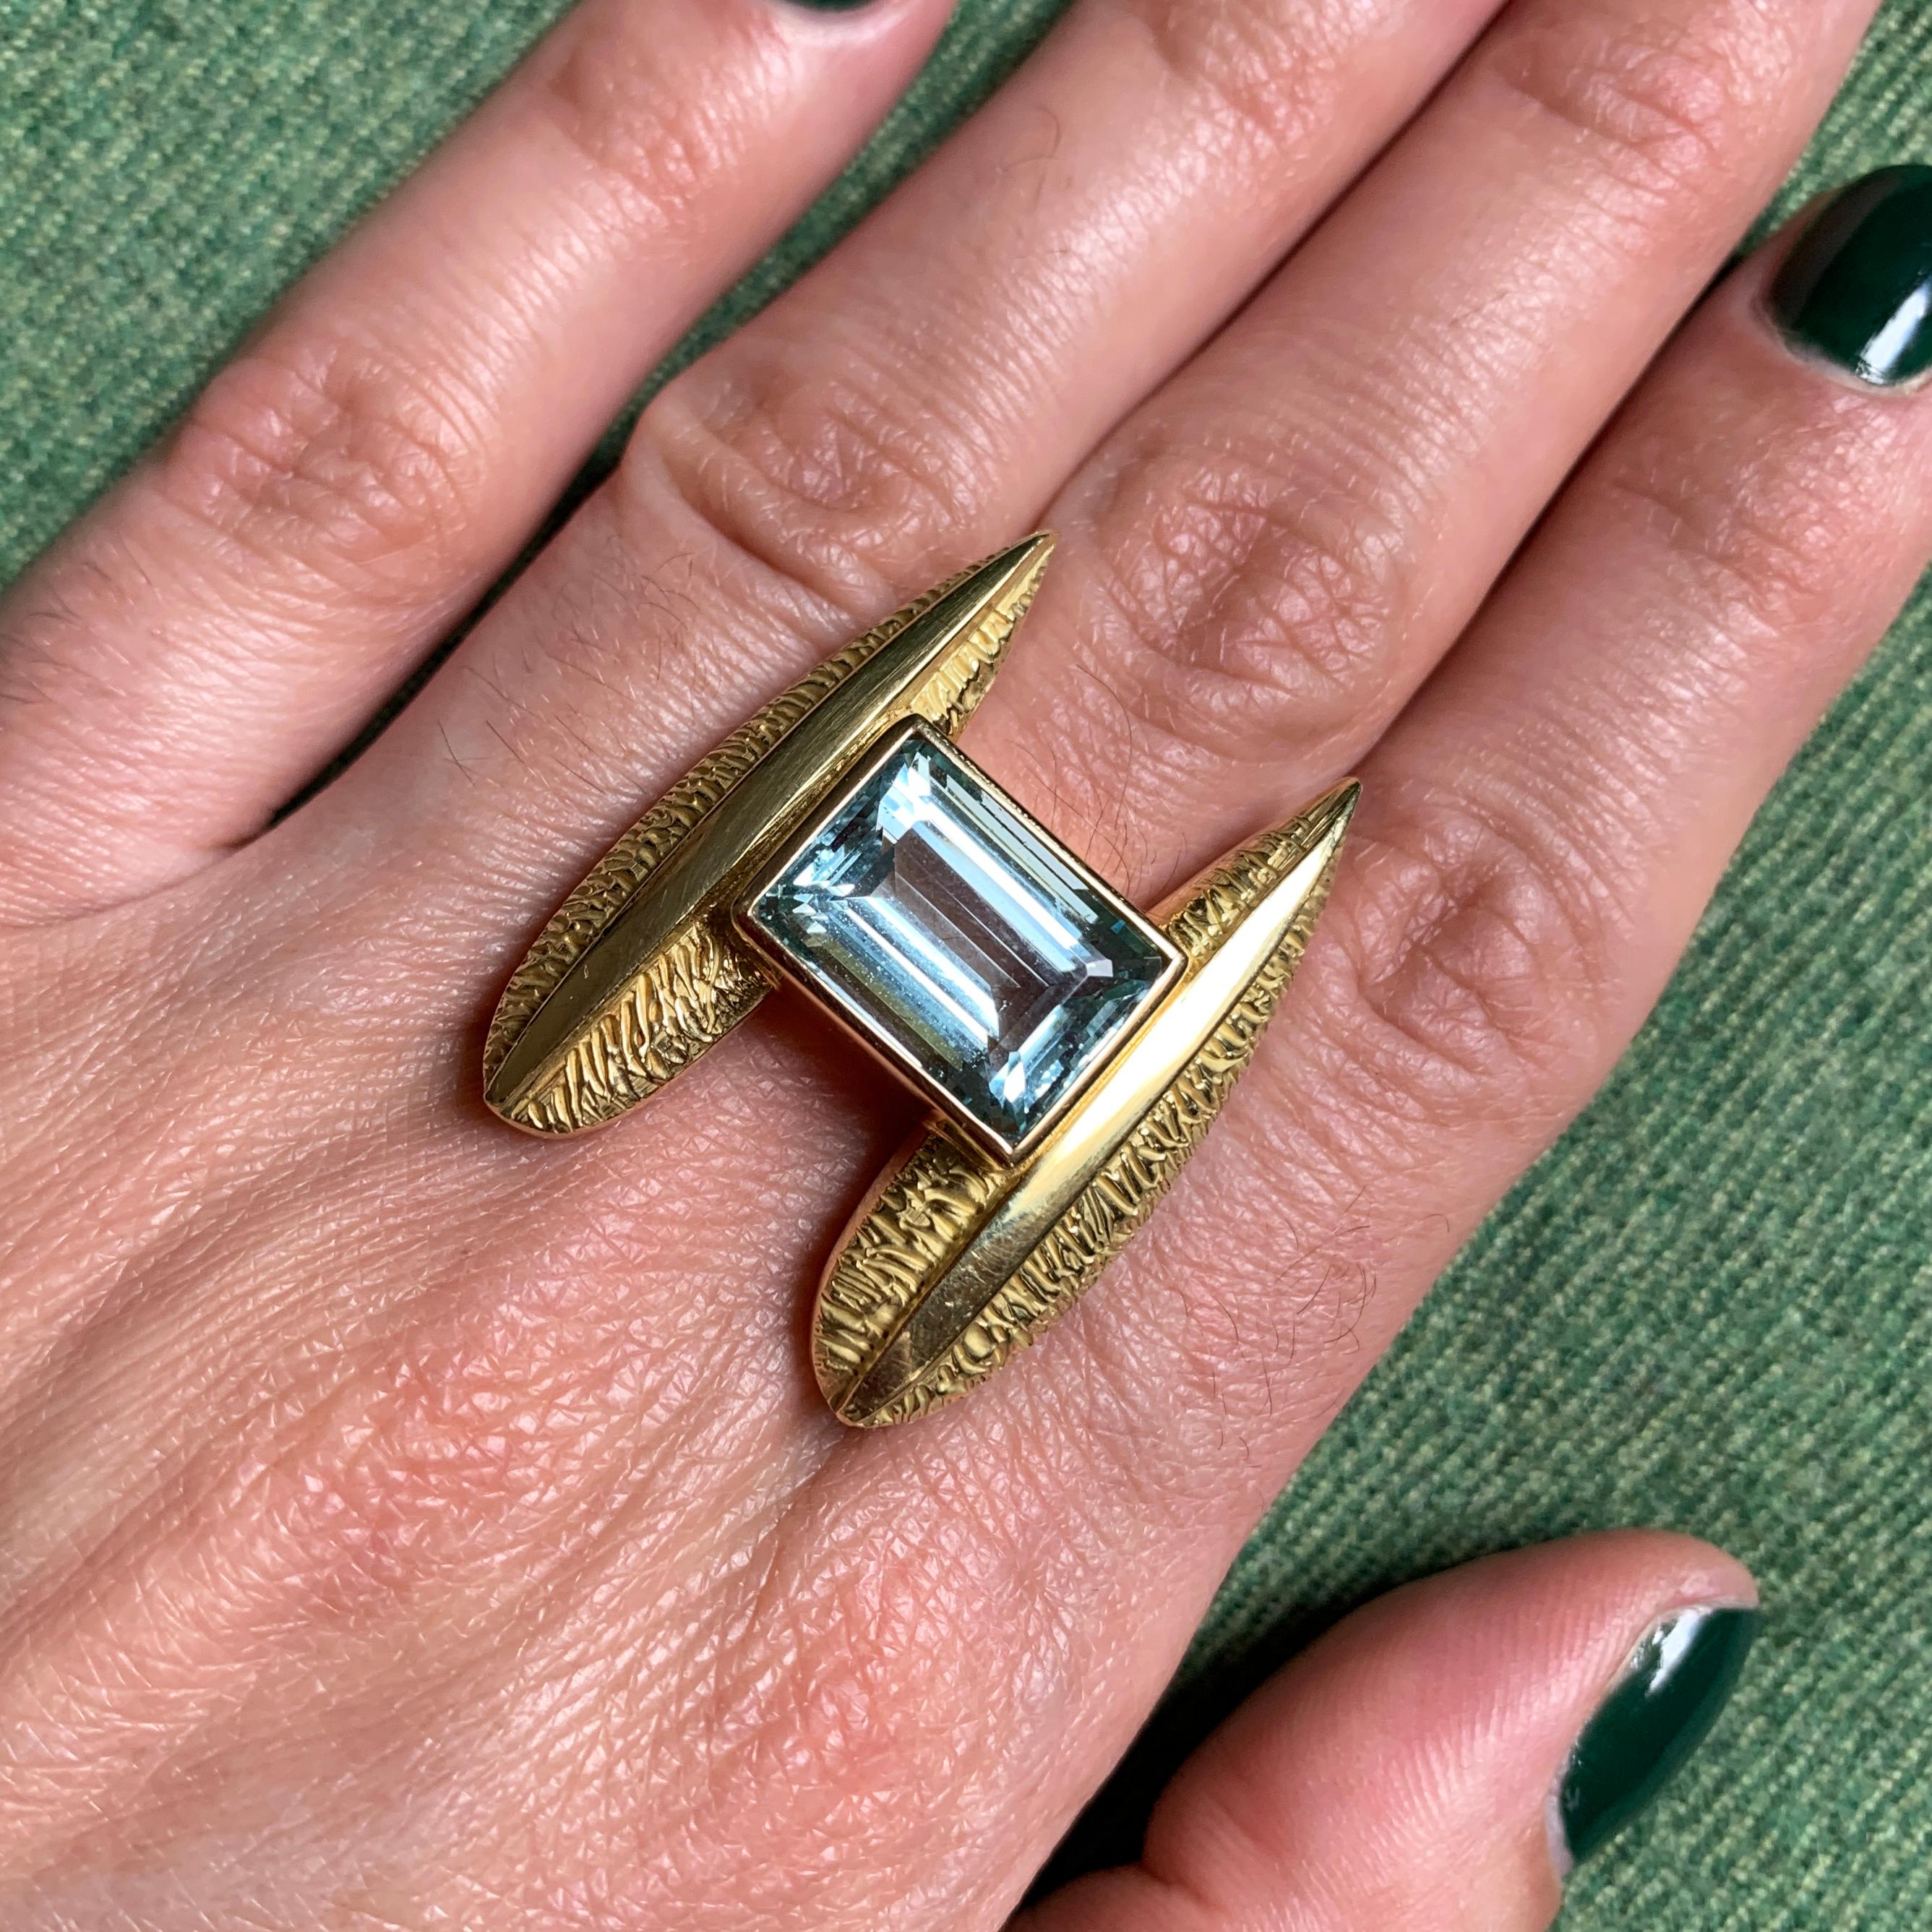 A one-of-a-kind aquamarine and 18 karat gold ring, by Giorgio Facchini, 2008. 

The ring is size 6.75. Signed Giorgio Facchini with Italian hallmarks.